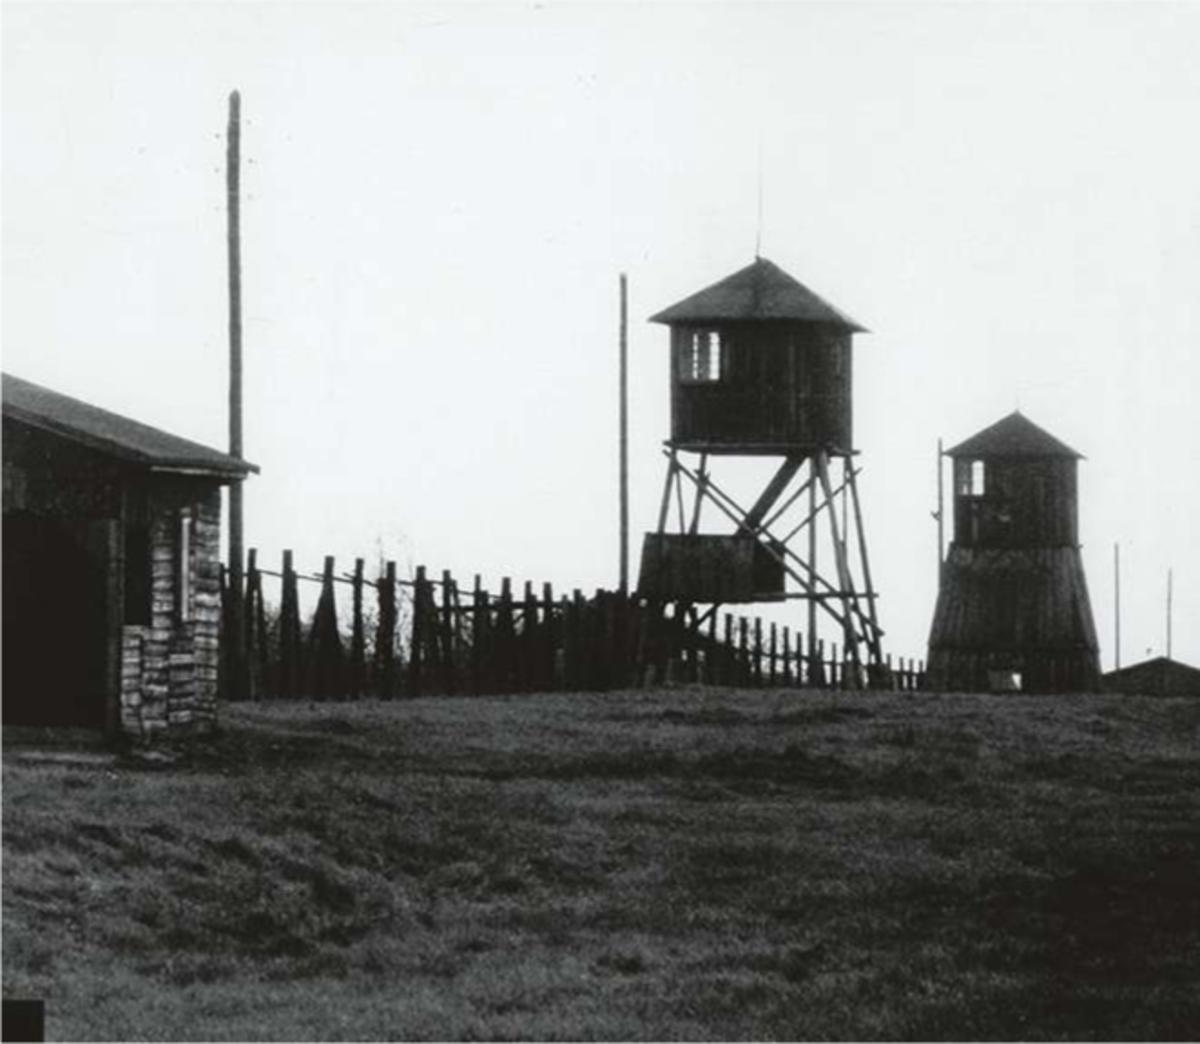 Rij wachttorens in concentratiekamp Majdanek.